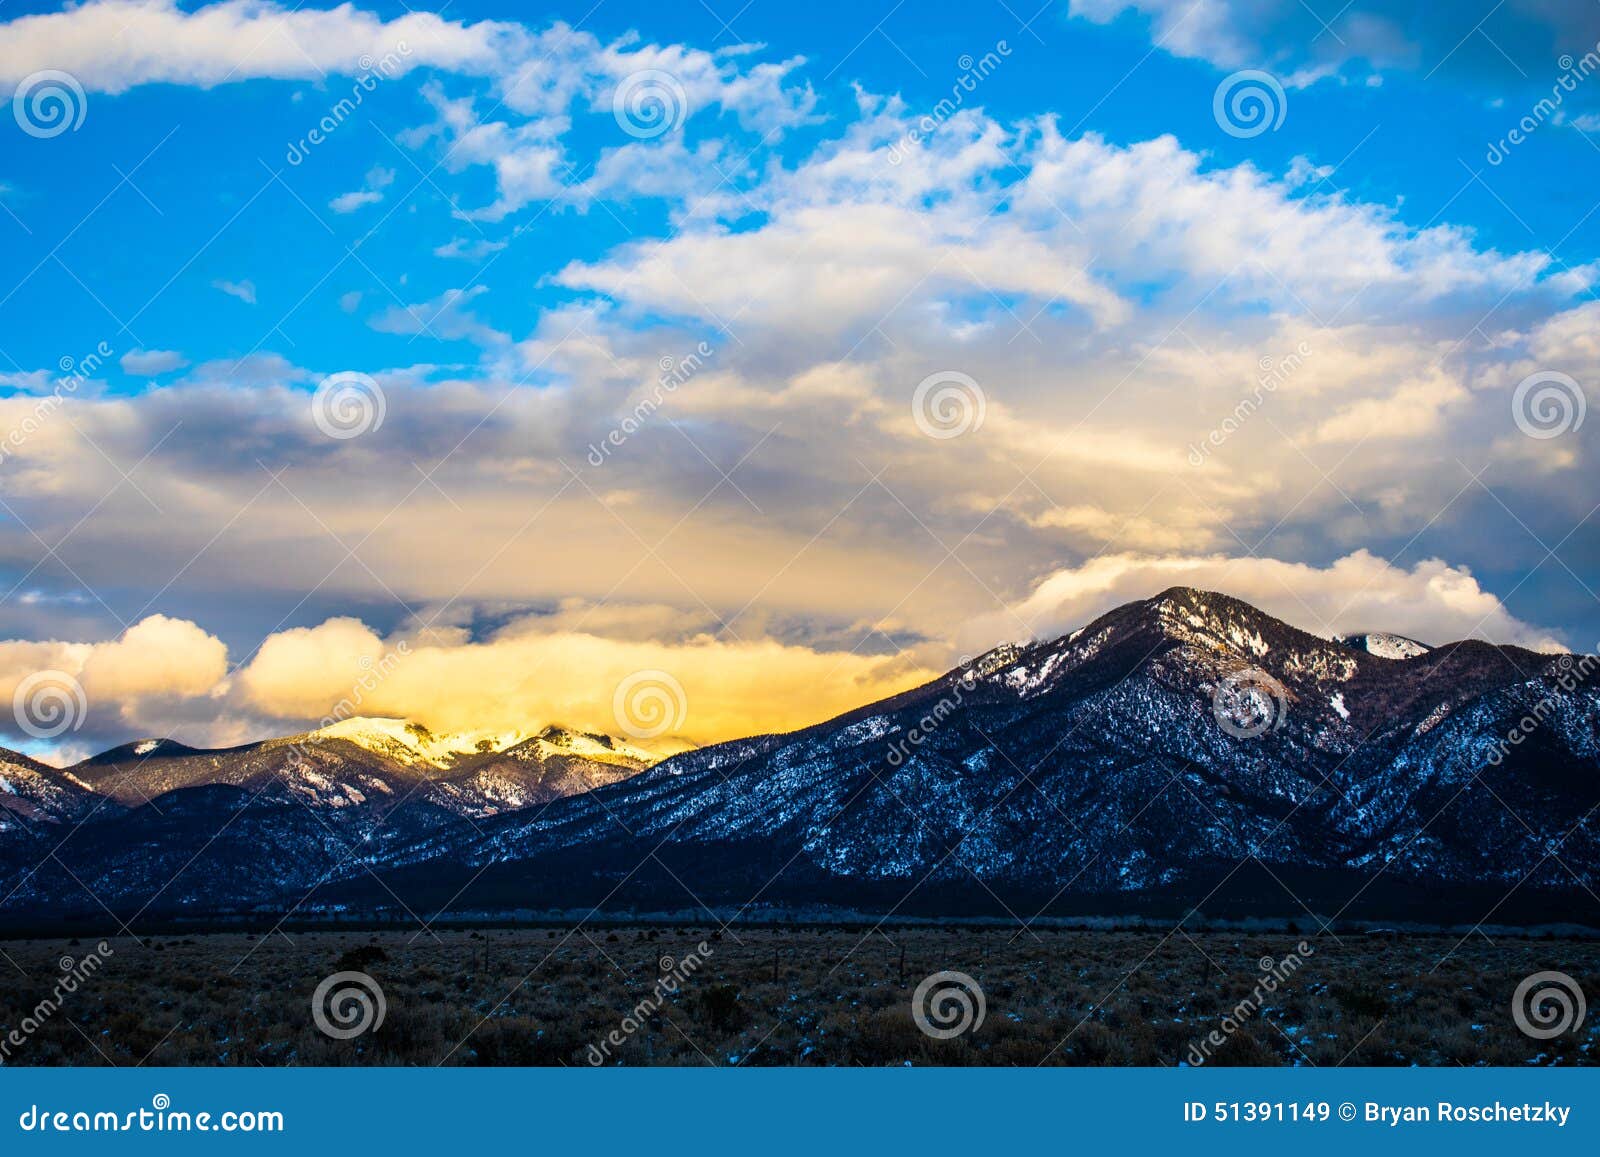 new mexico sangre de cristo taos mountains with snow sunset